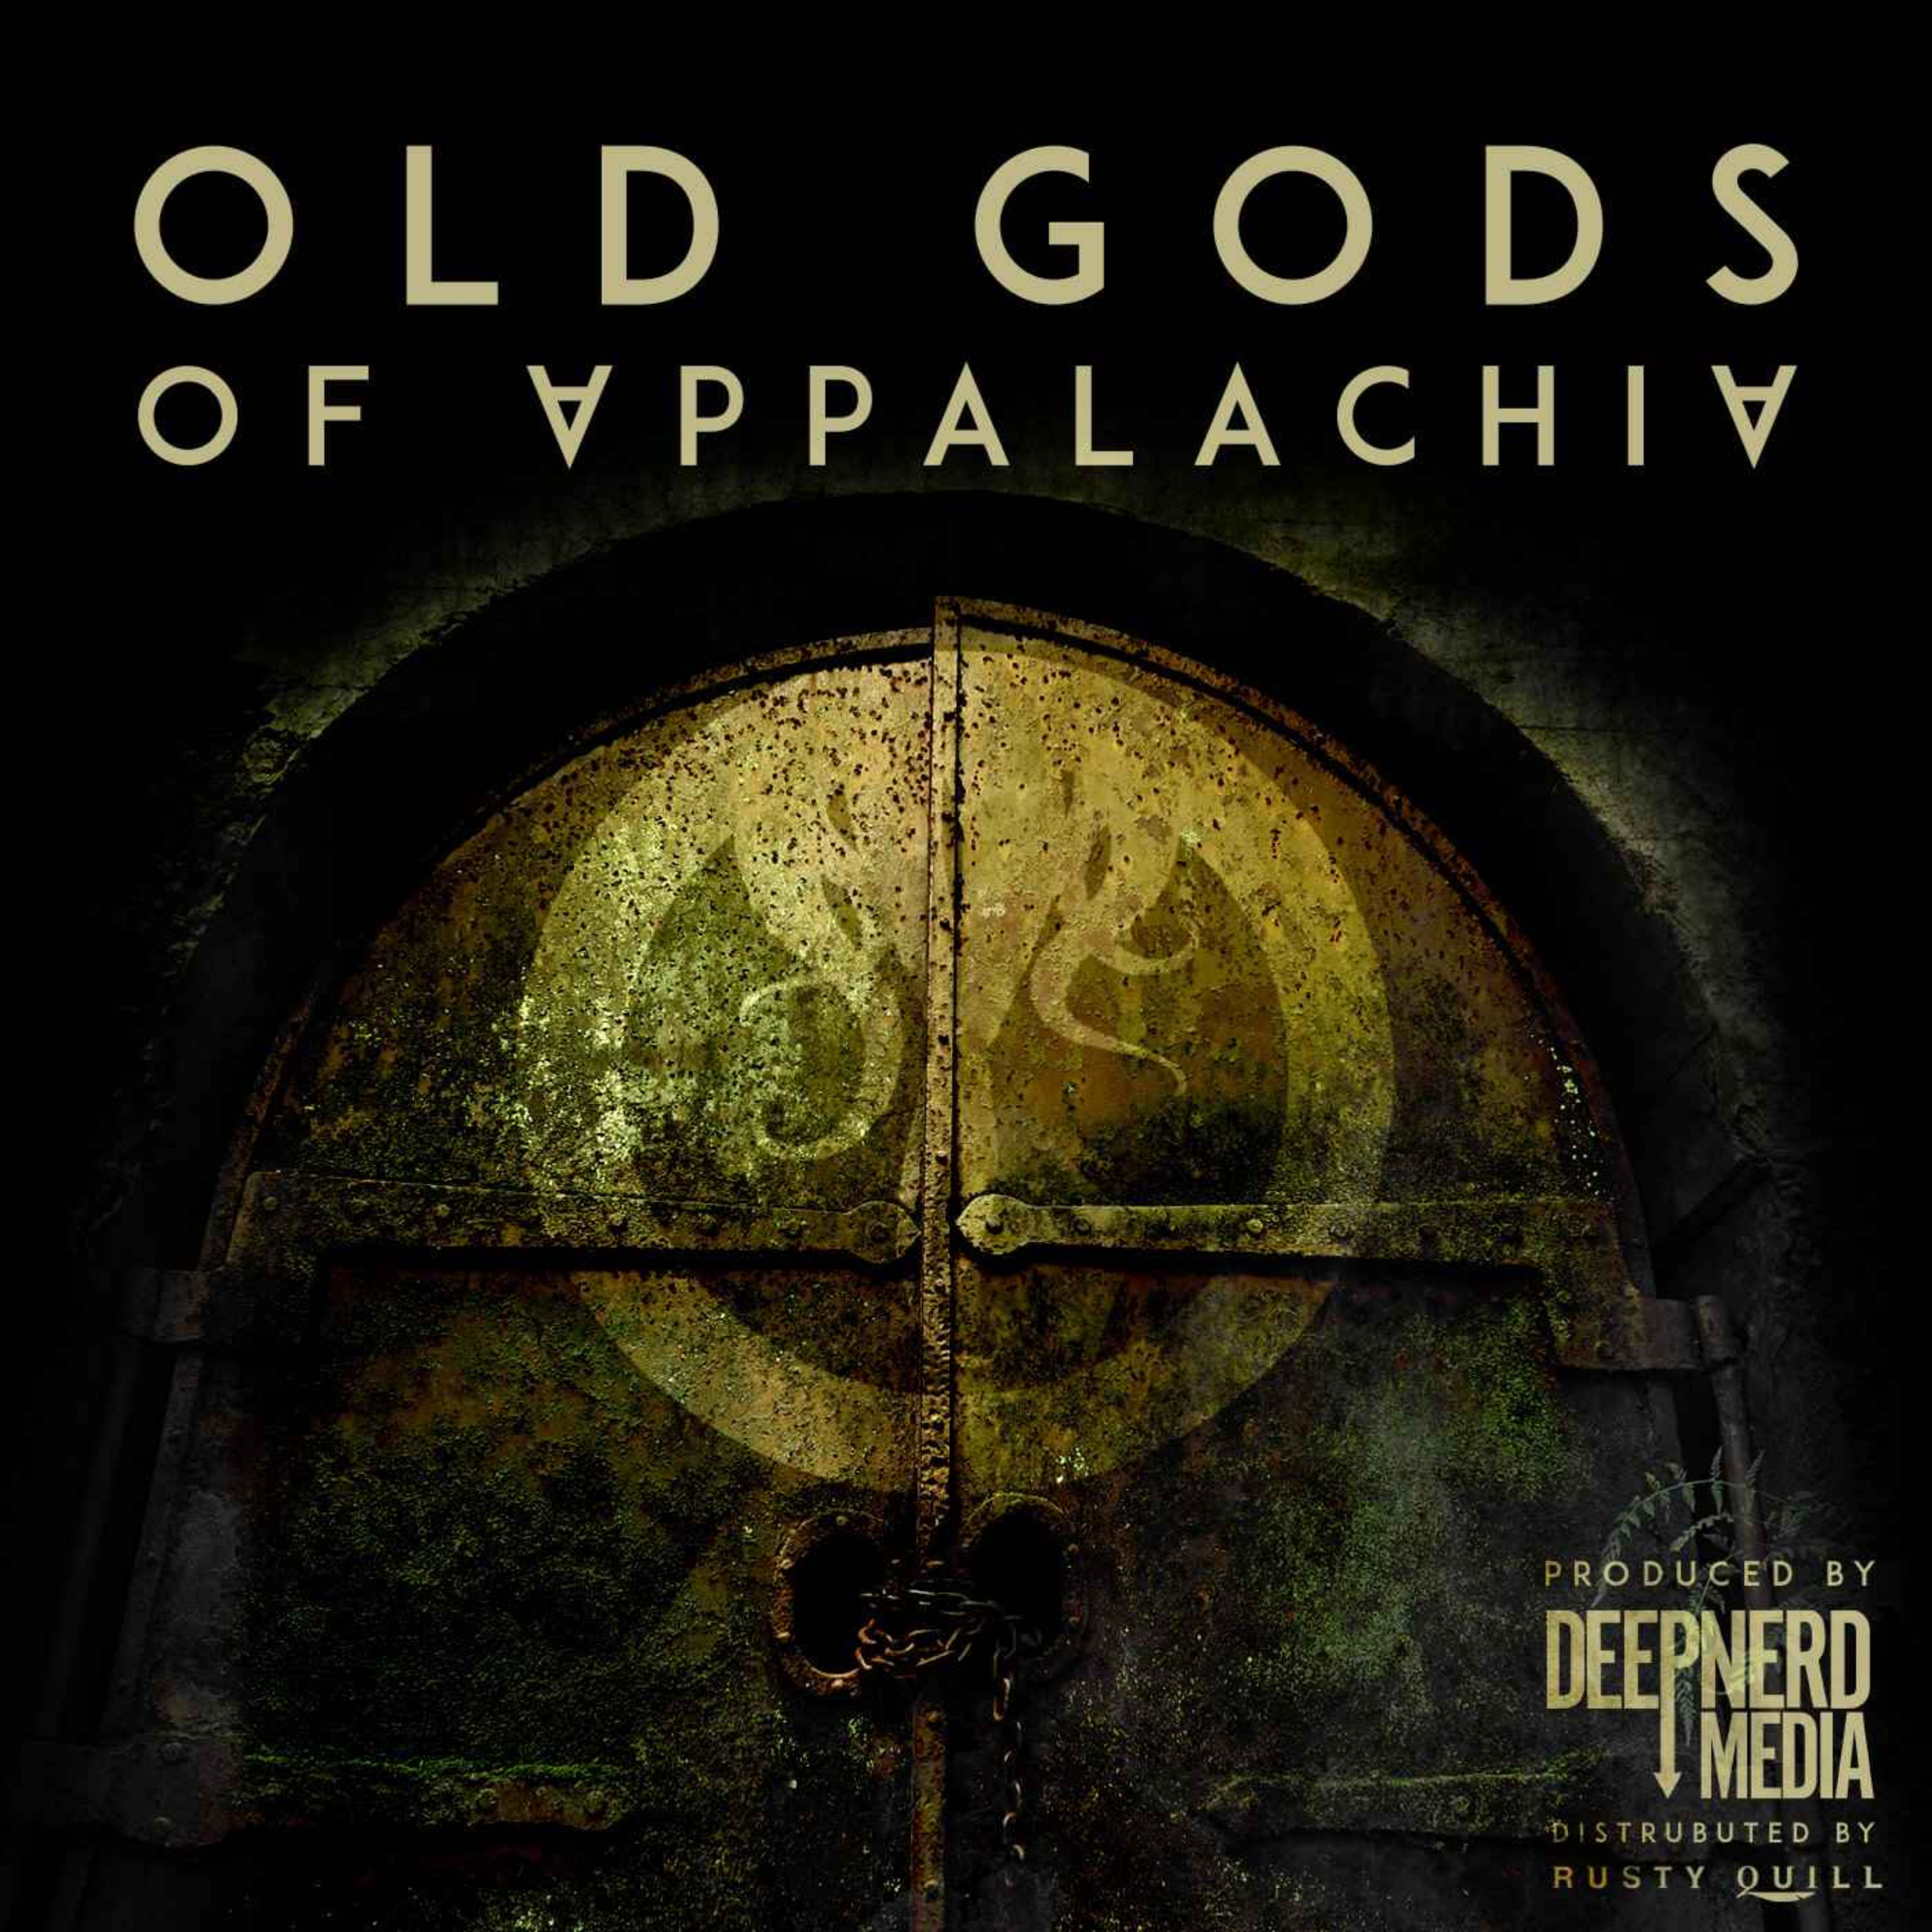 Old Gods of Appalachia podcast show image